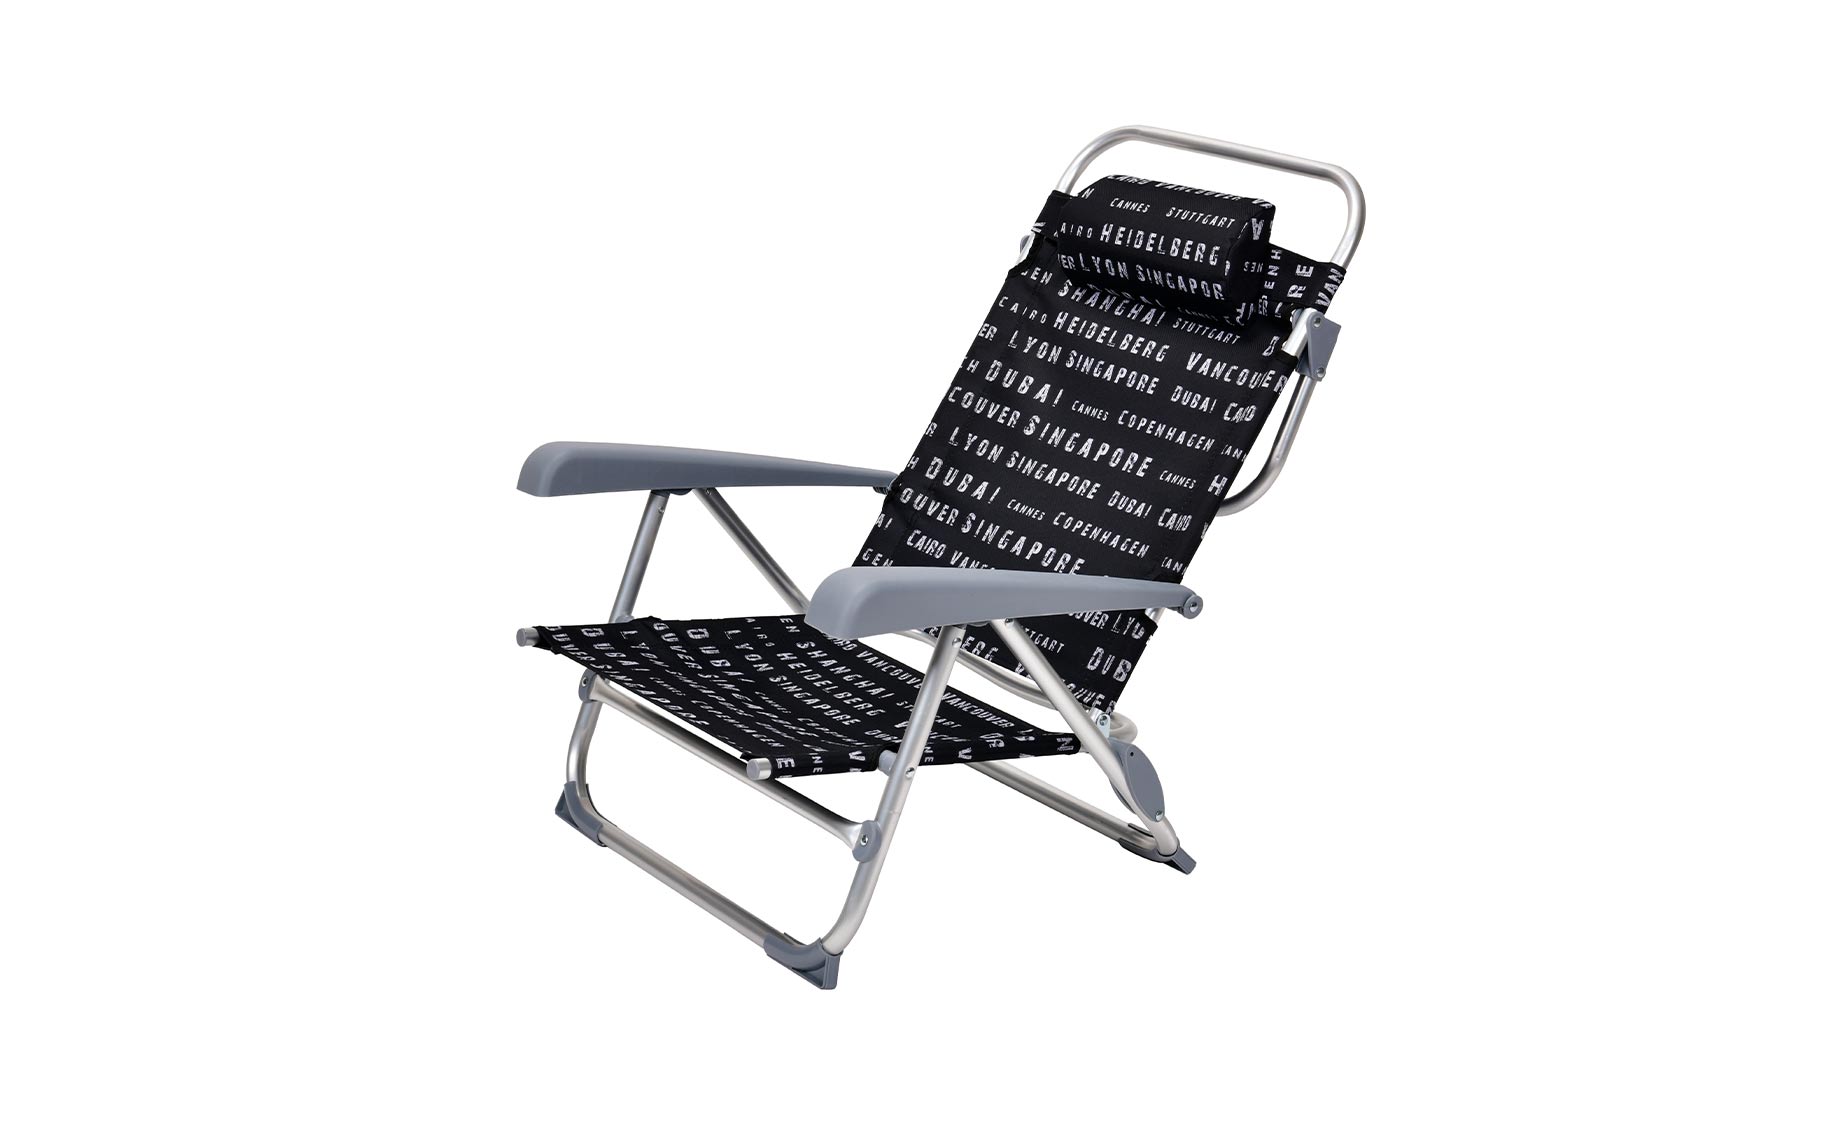 Playa aluminijska preklopna stolica 101x60x78cm crna